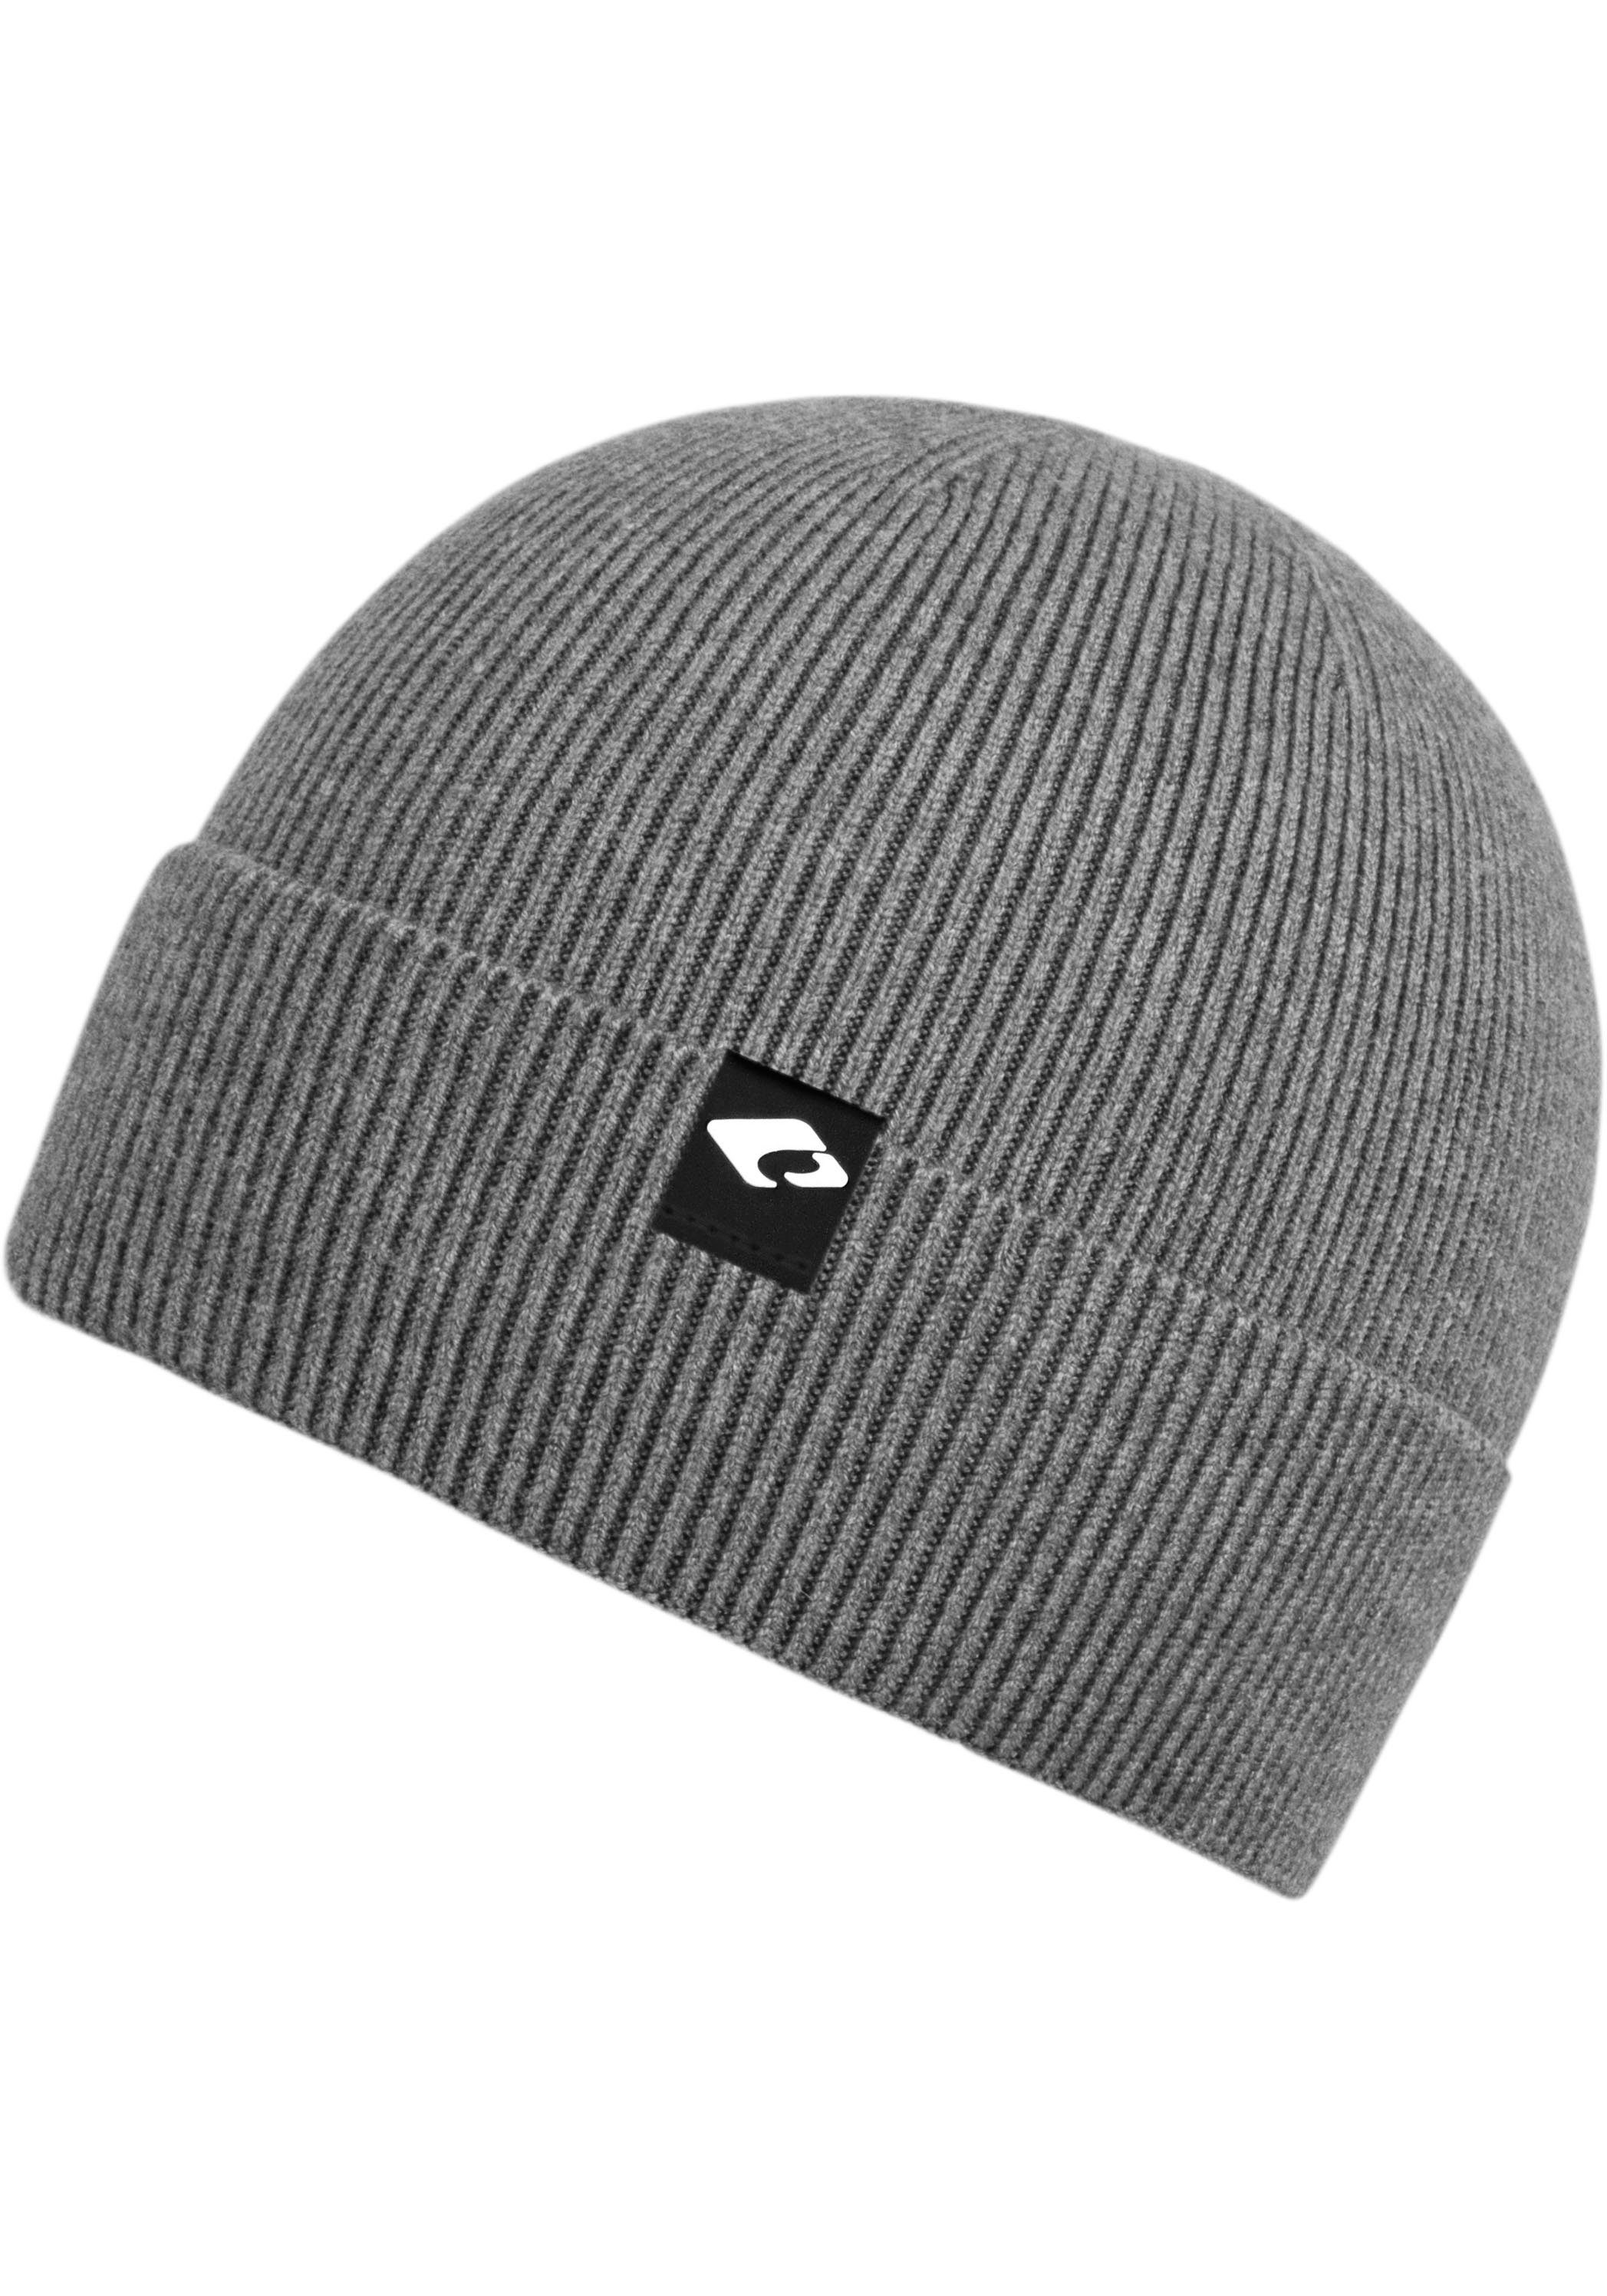 chillouts Hat Strickmütze Rippenstrick Cyrill Feiner grey